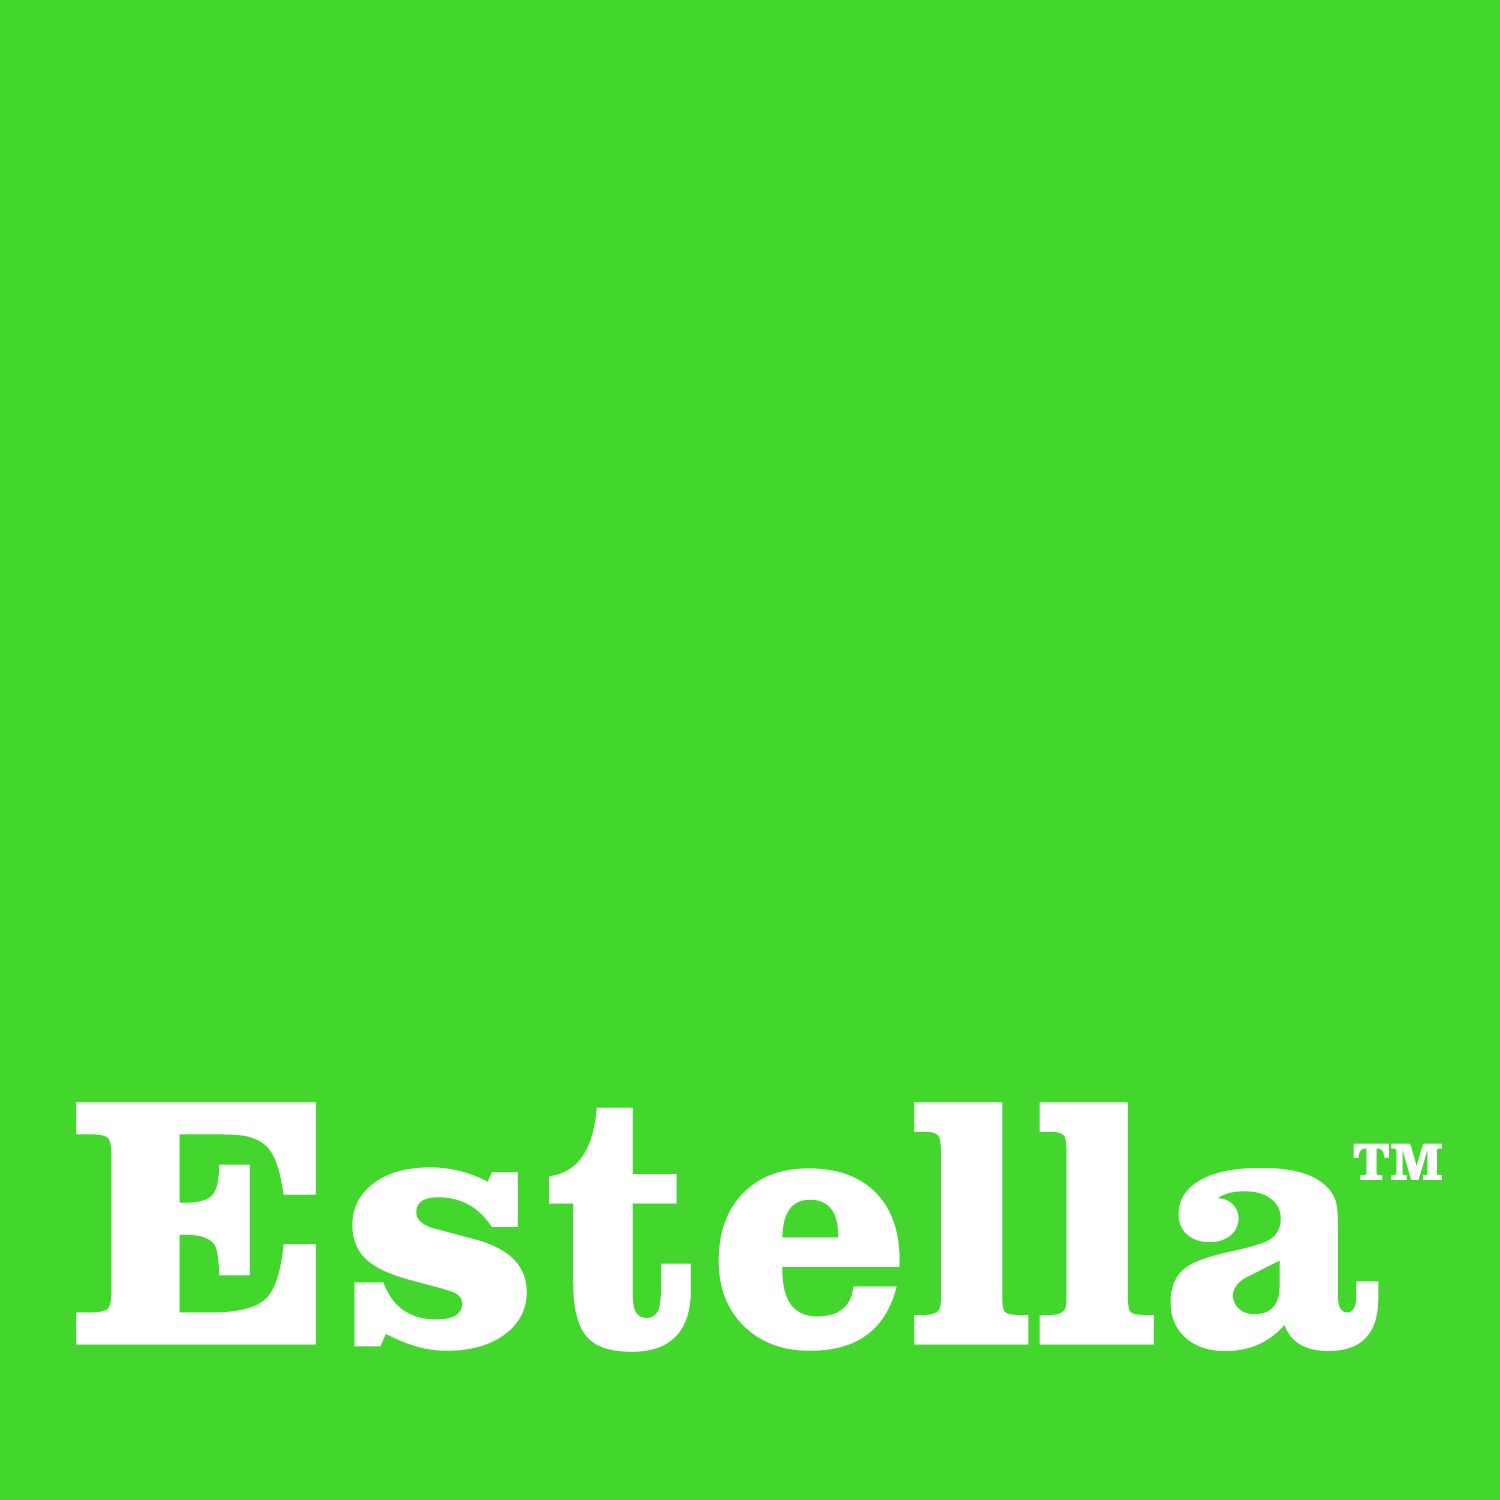 Estella Logo